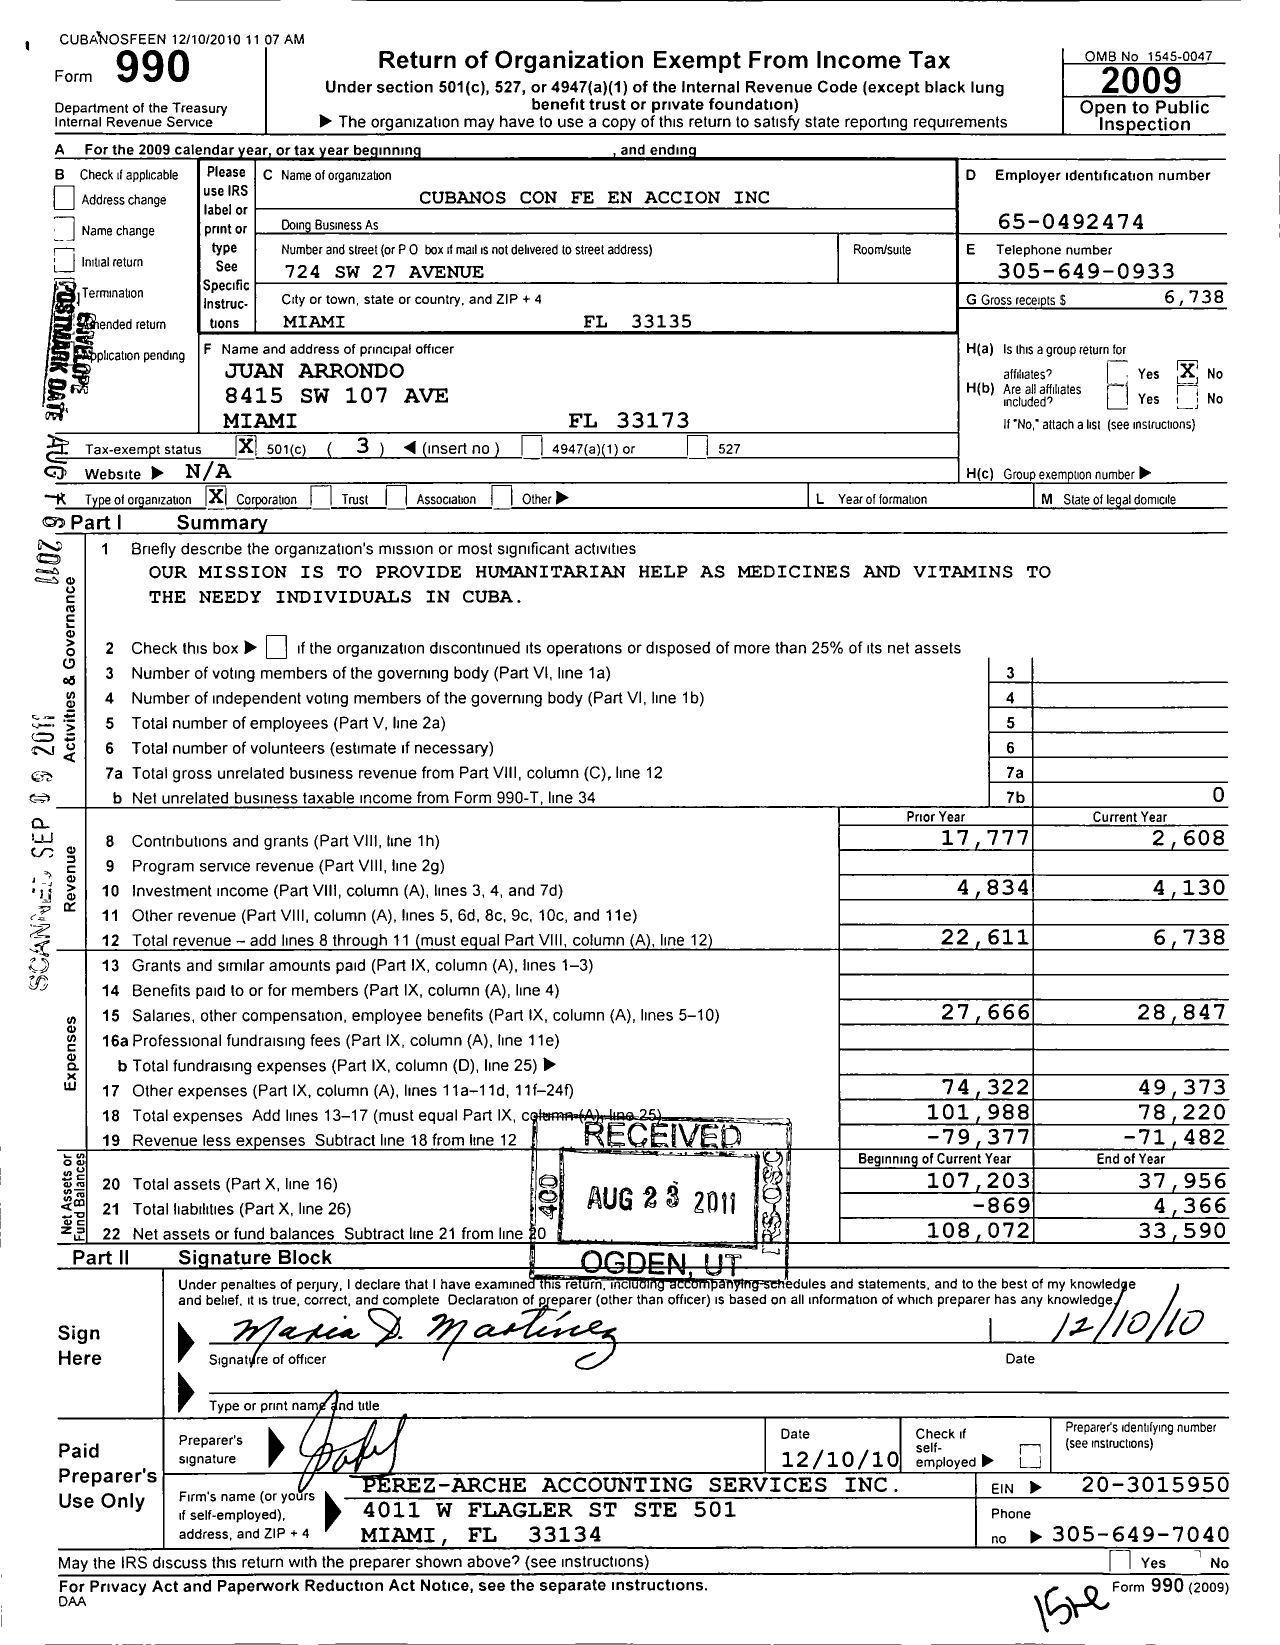 Image of first page of 2009 Form 990 for Fundacion Padre Santana Cubanos Con Fe En Accion